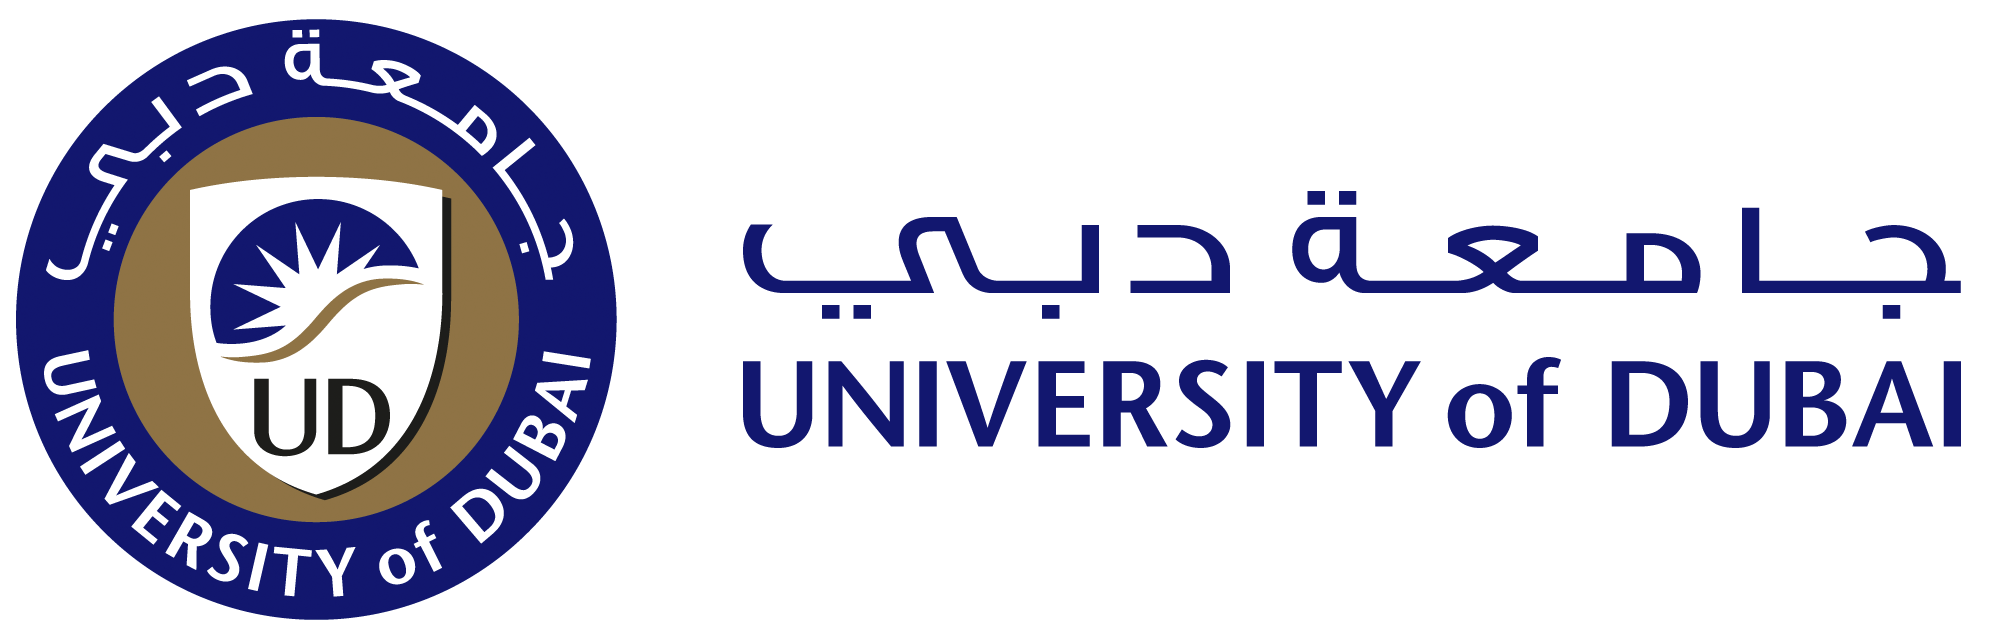 Dubai University